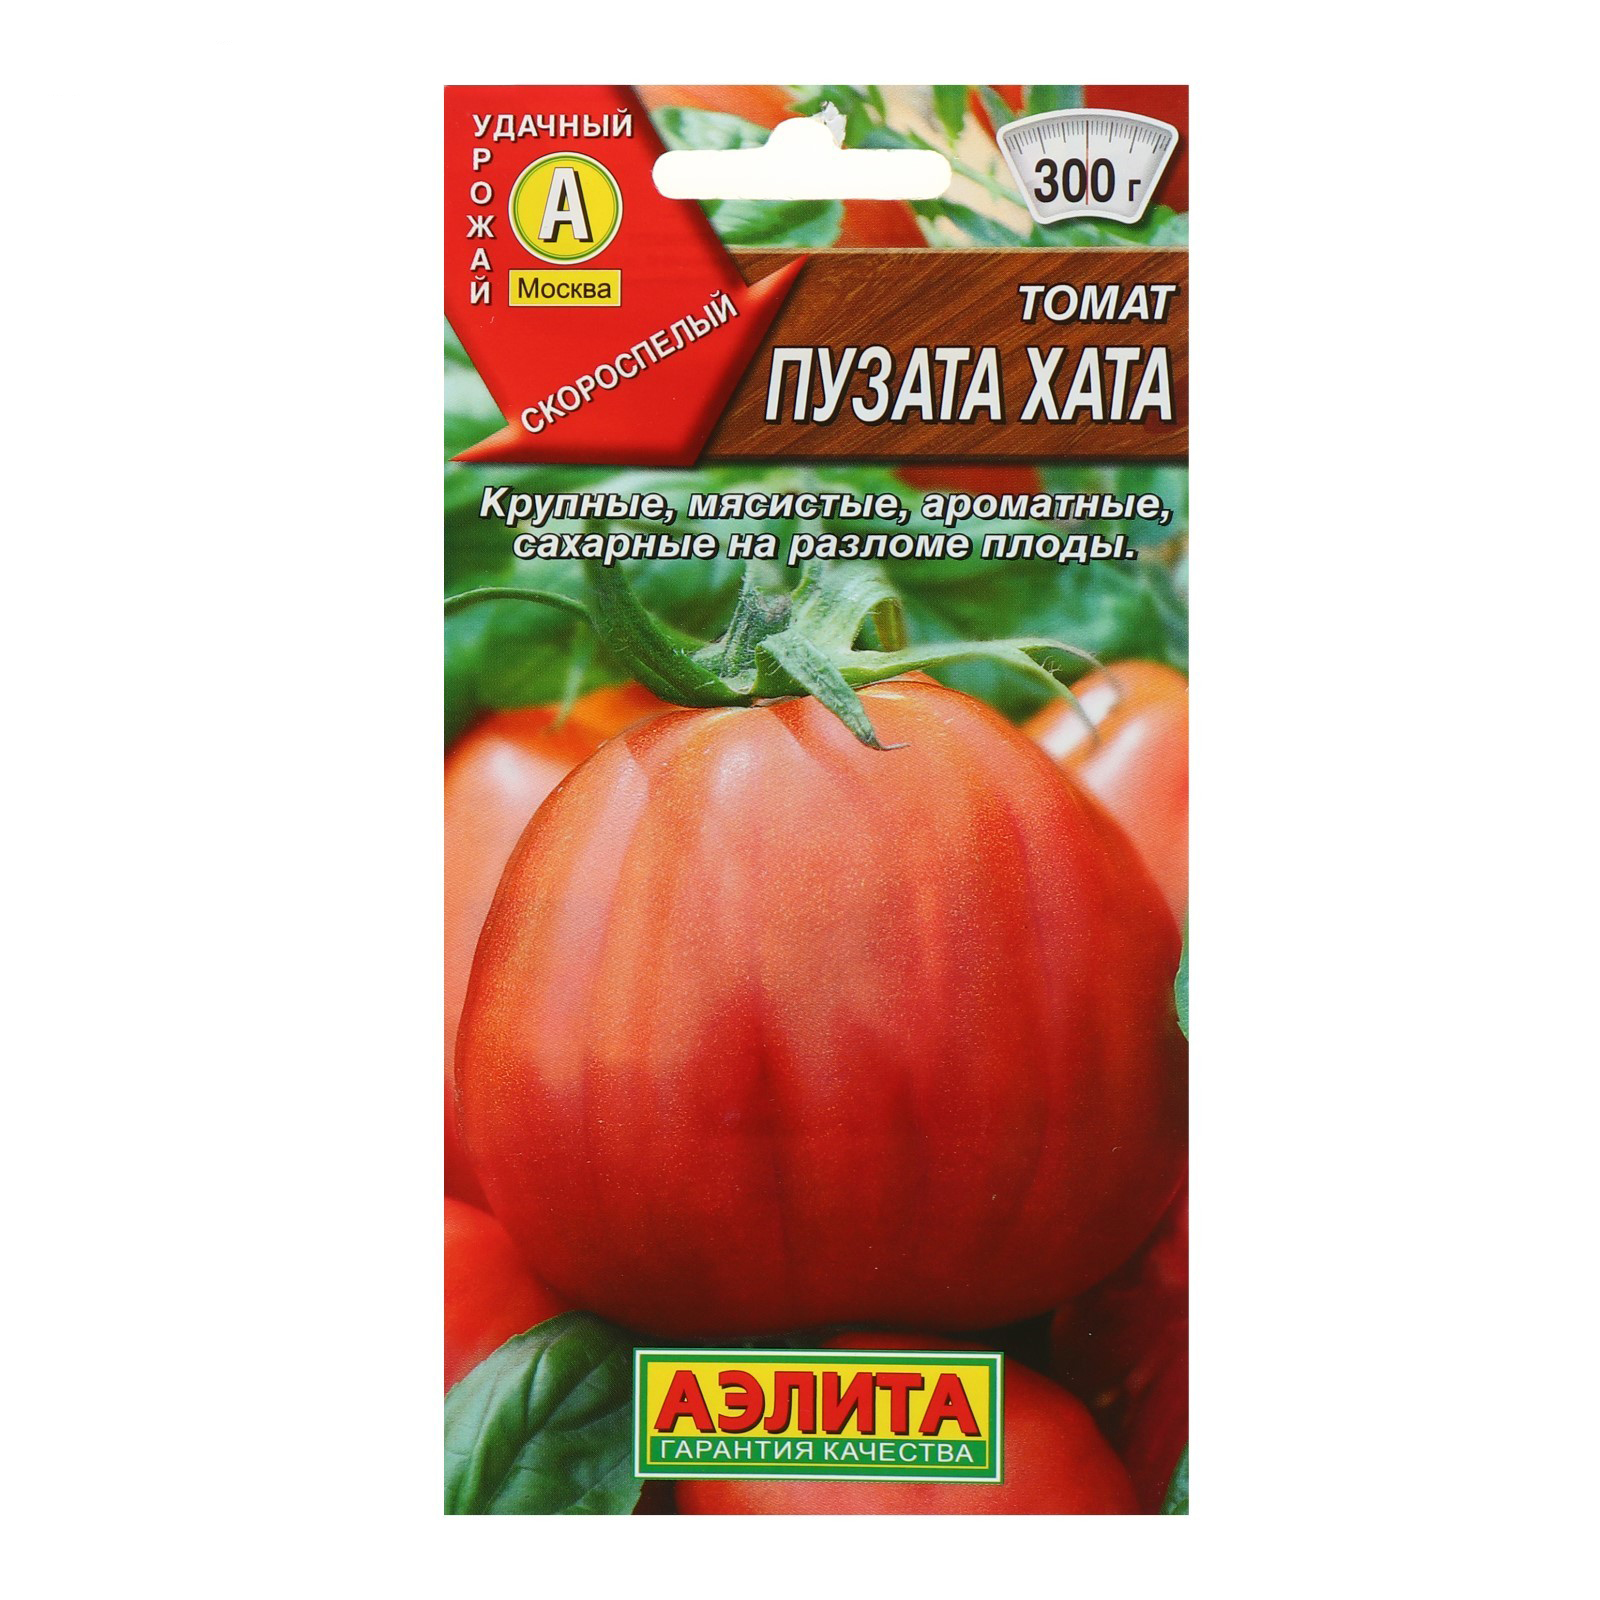 Семена томат Пузата хата. Пузата хата помидоры описание сорта отзывы садоводов